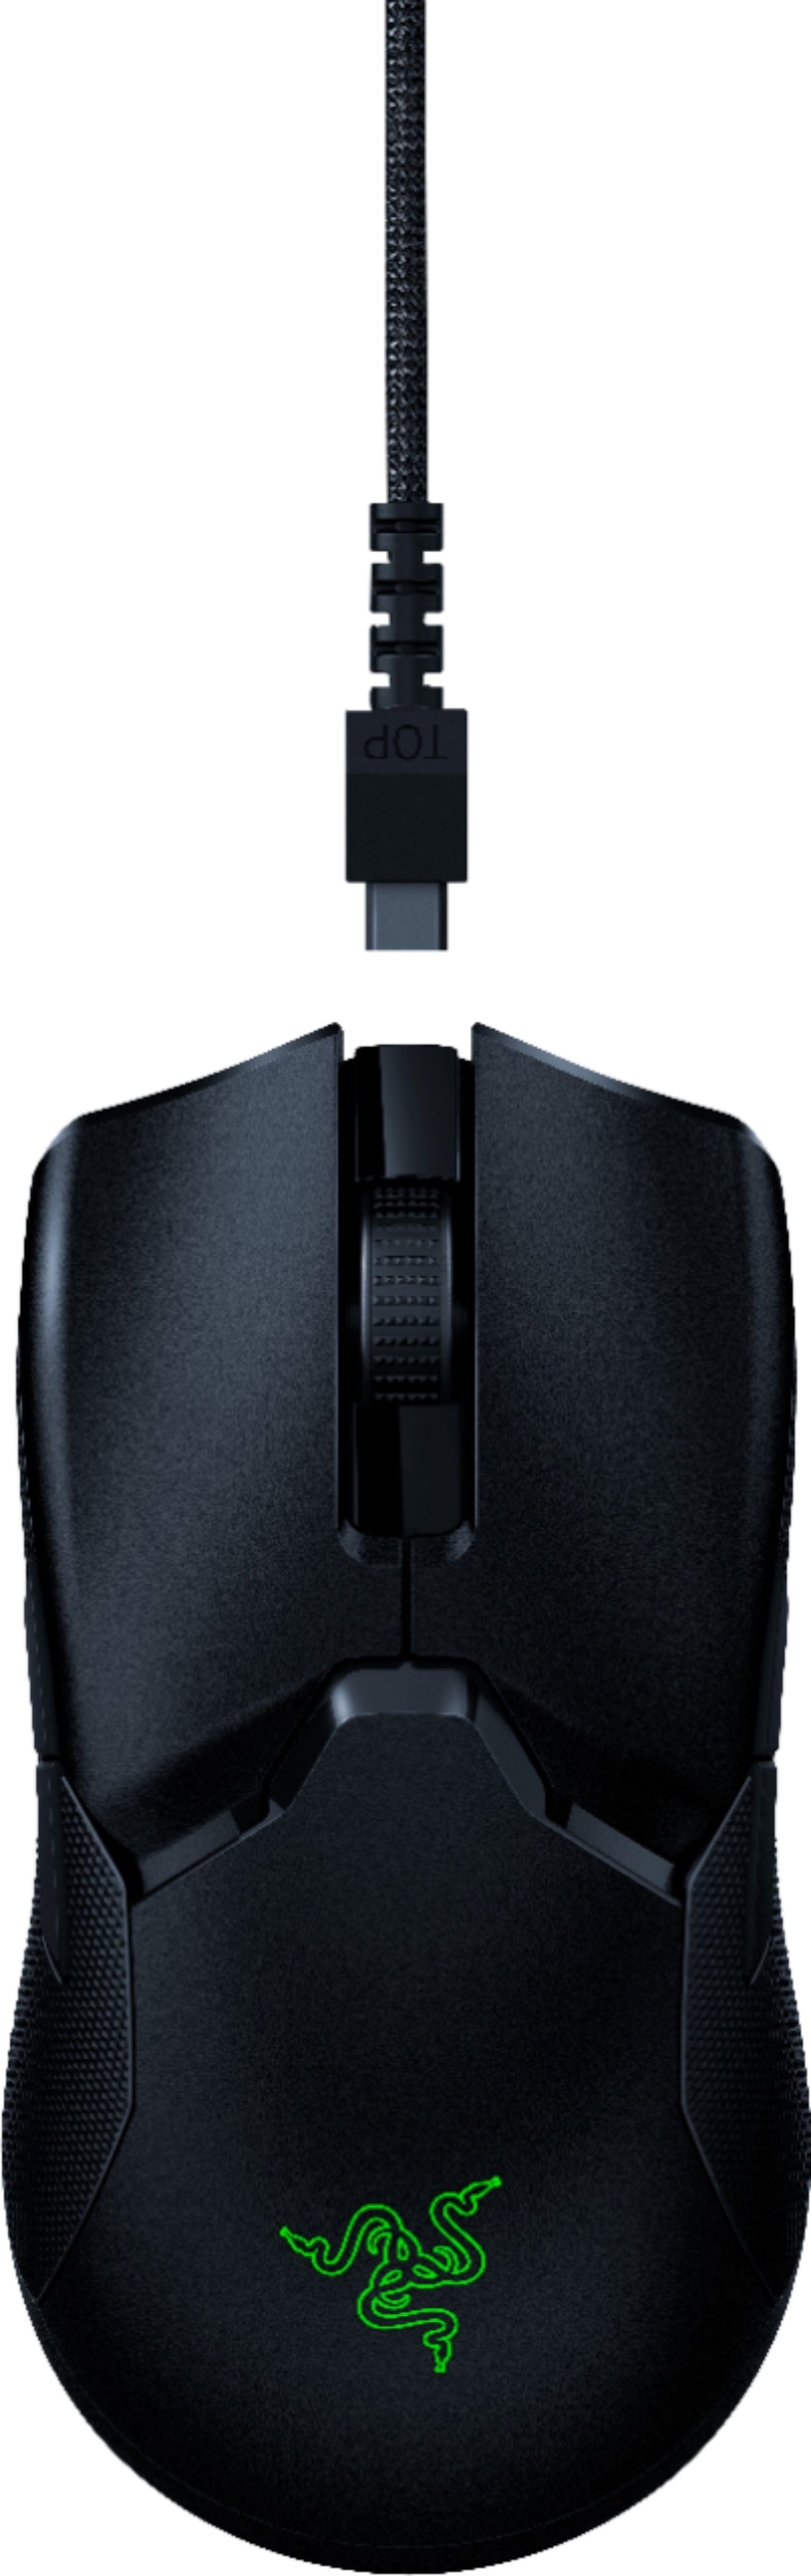 Razer Viper Ultimate Wireless Optical Gaming Mouse - Black